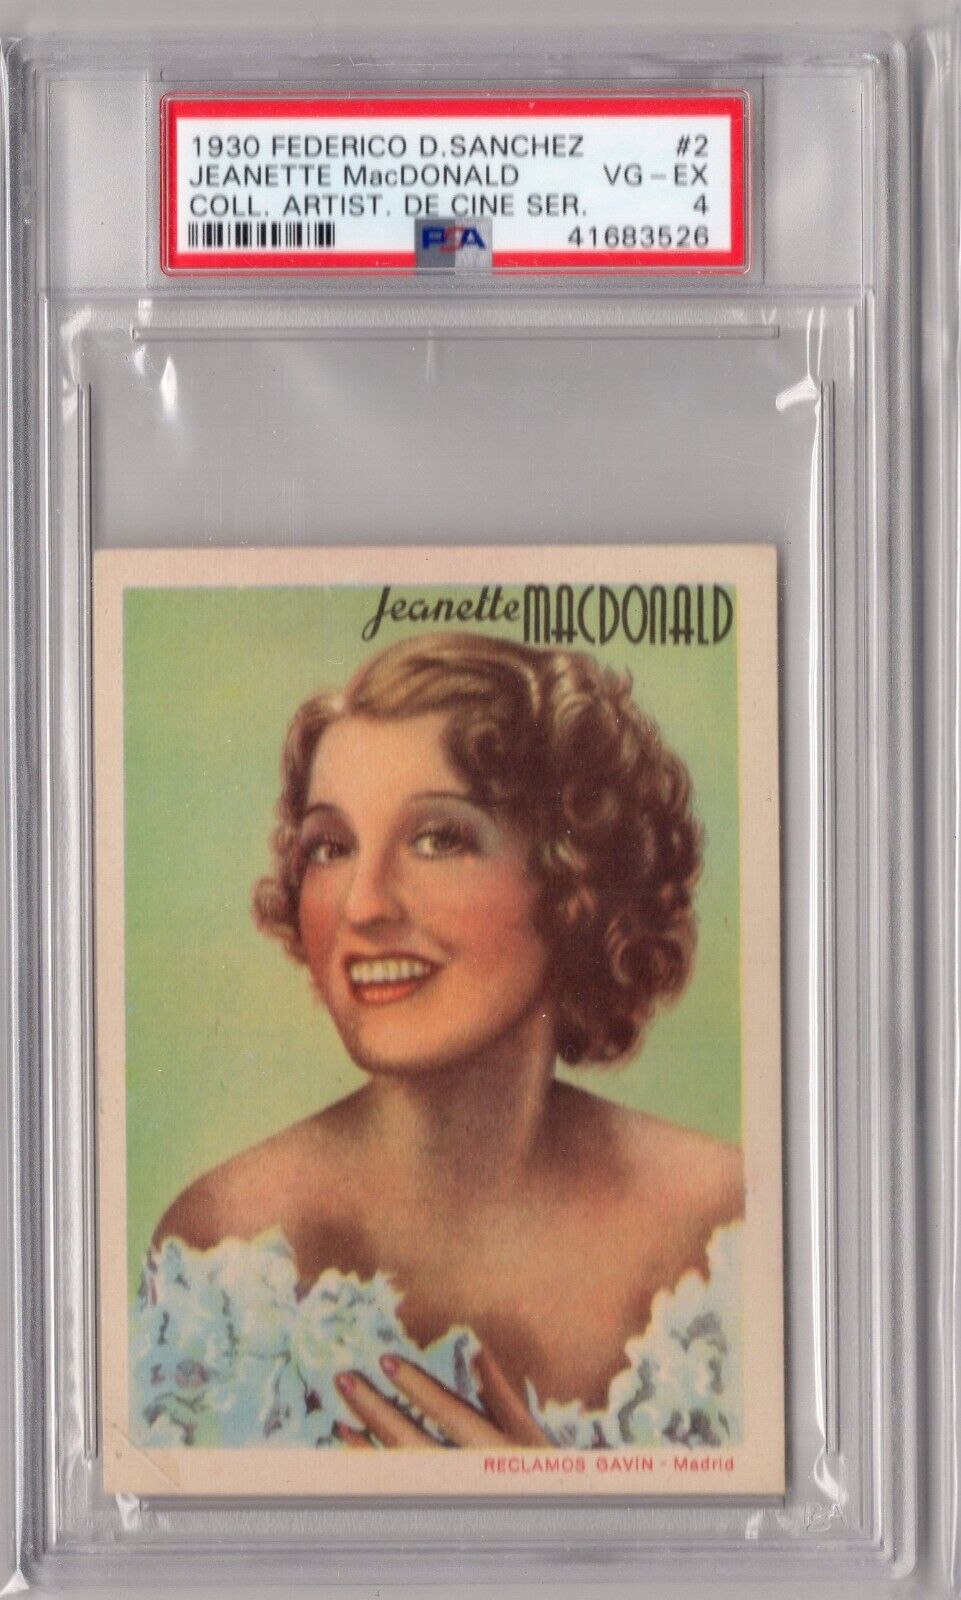 1930 Federico Sanchez Jeanette MacDonald Vintage Spanish Cinema Movie Card